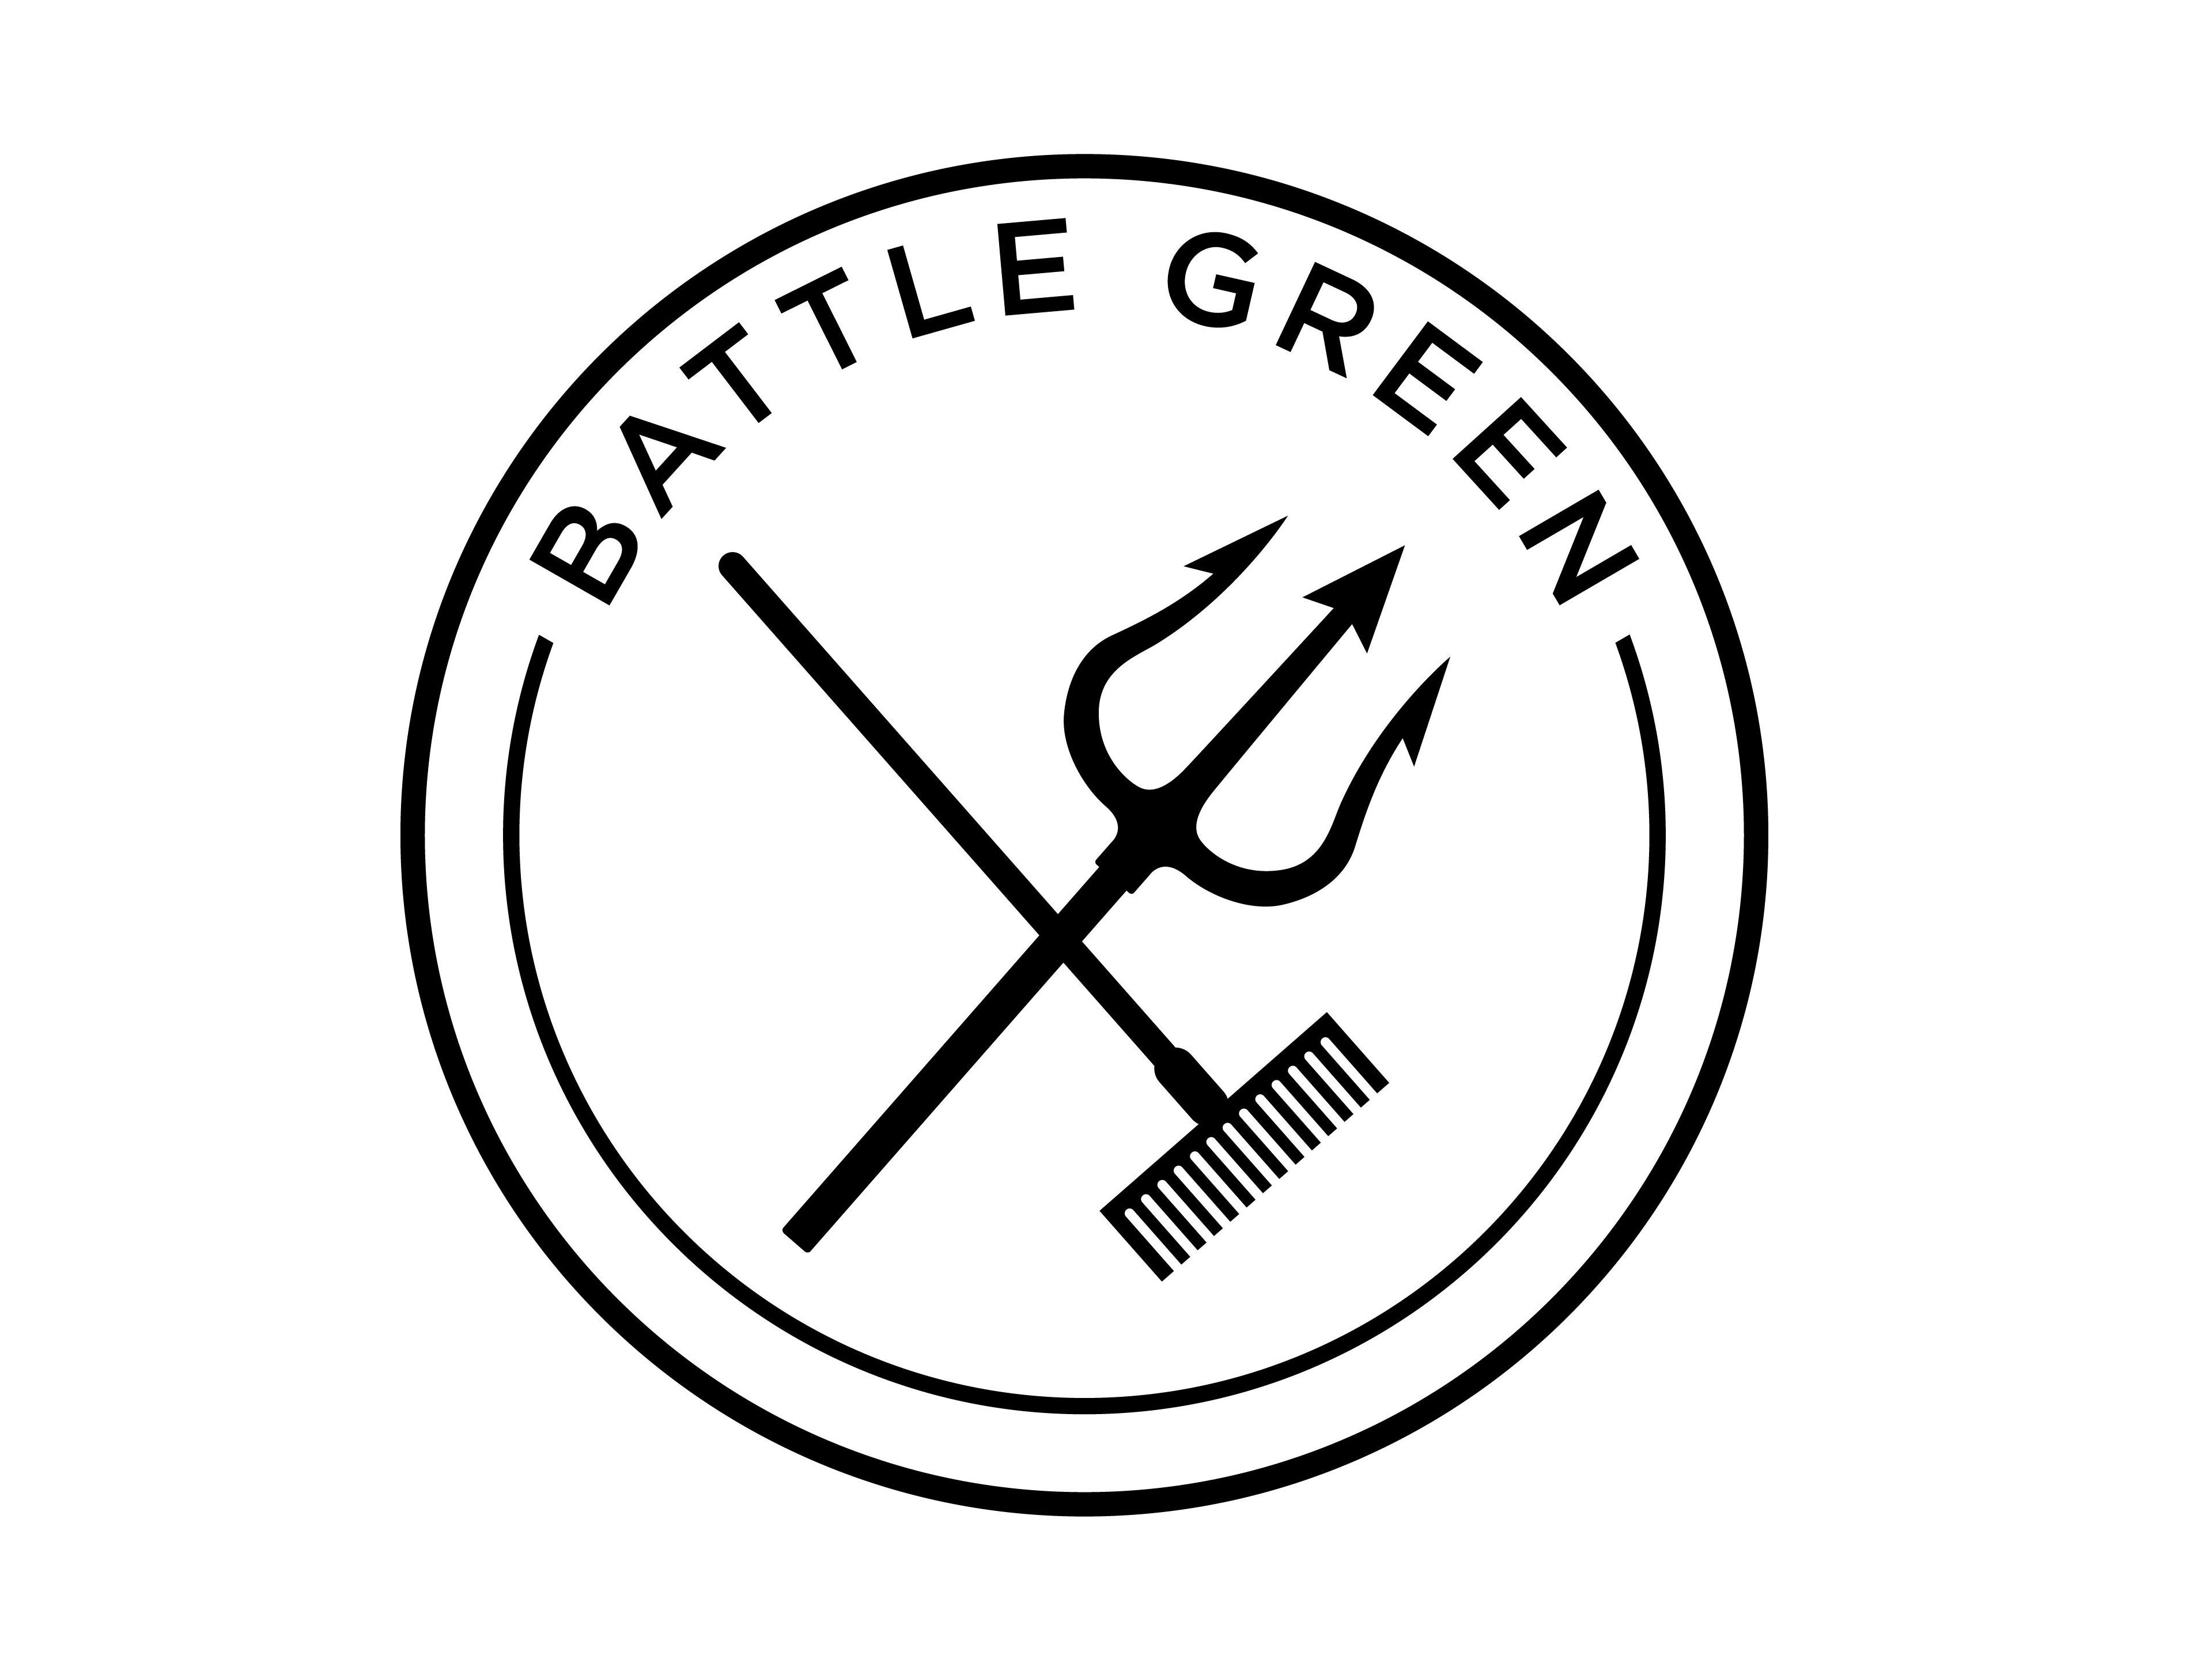 Battle Green brand logo